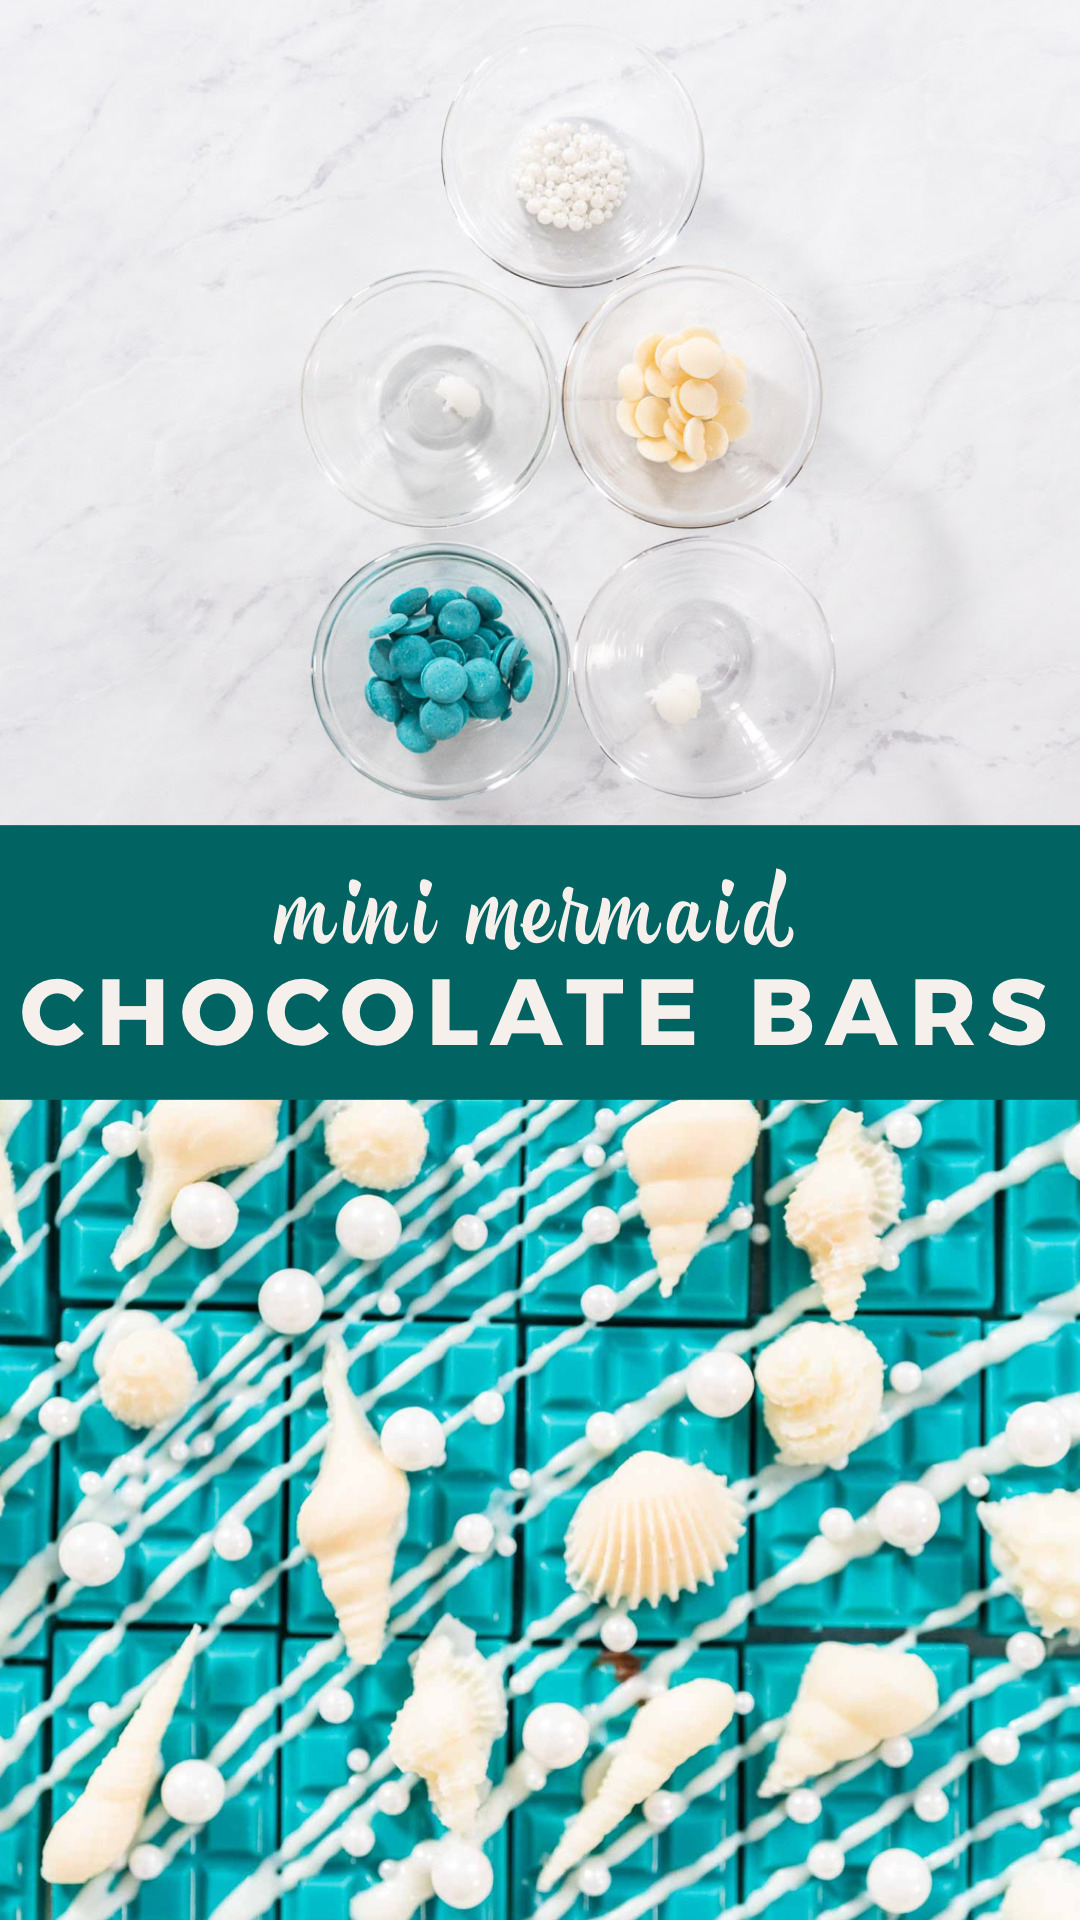 Mini mermaid chocolate bars